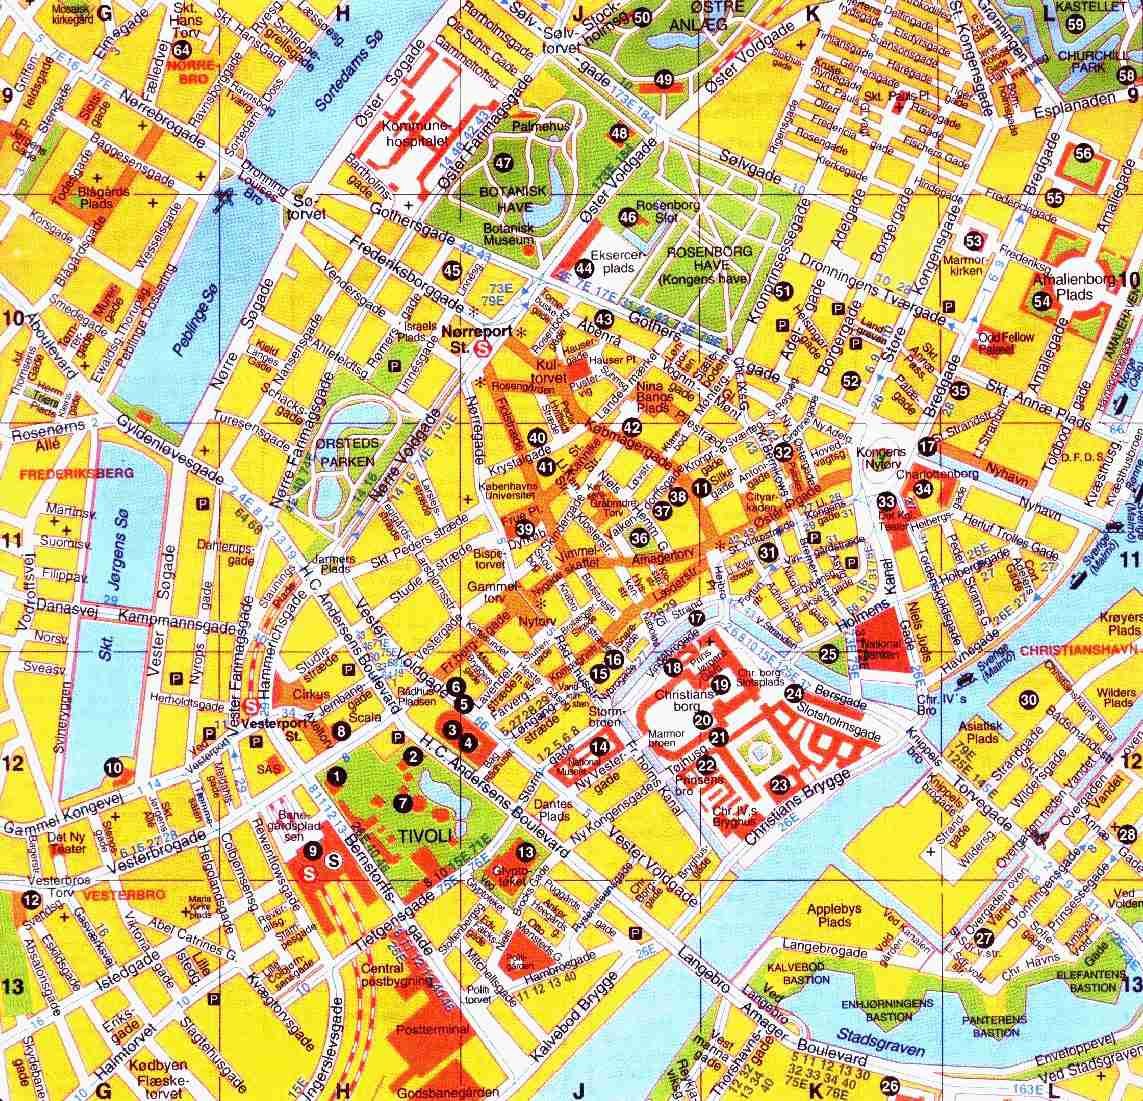 Mappa Copenaghen